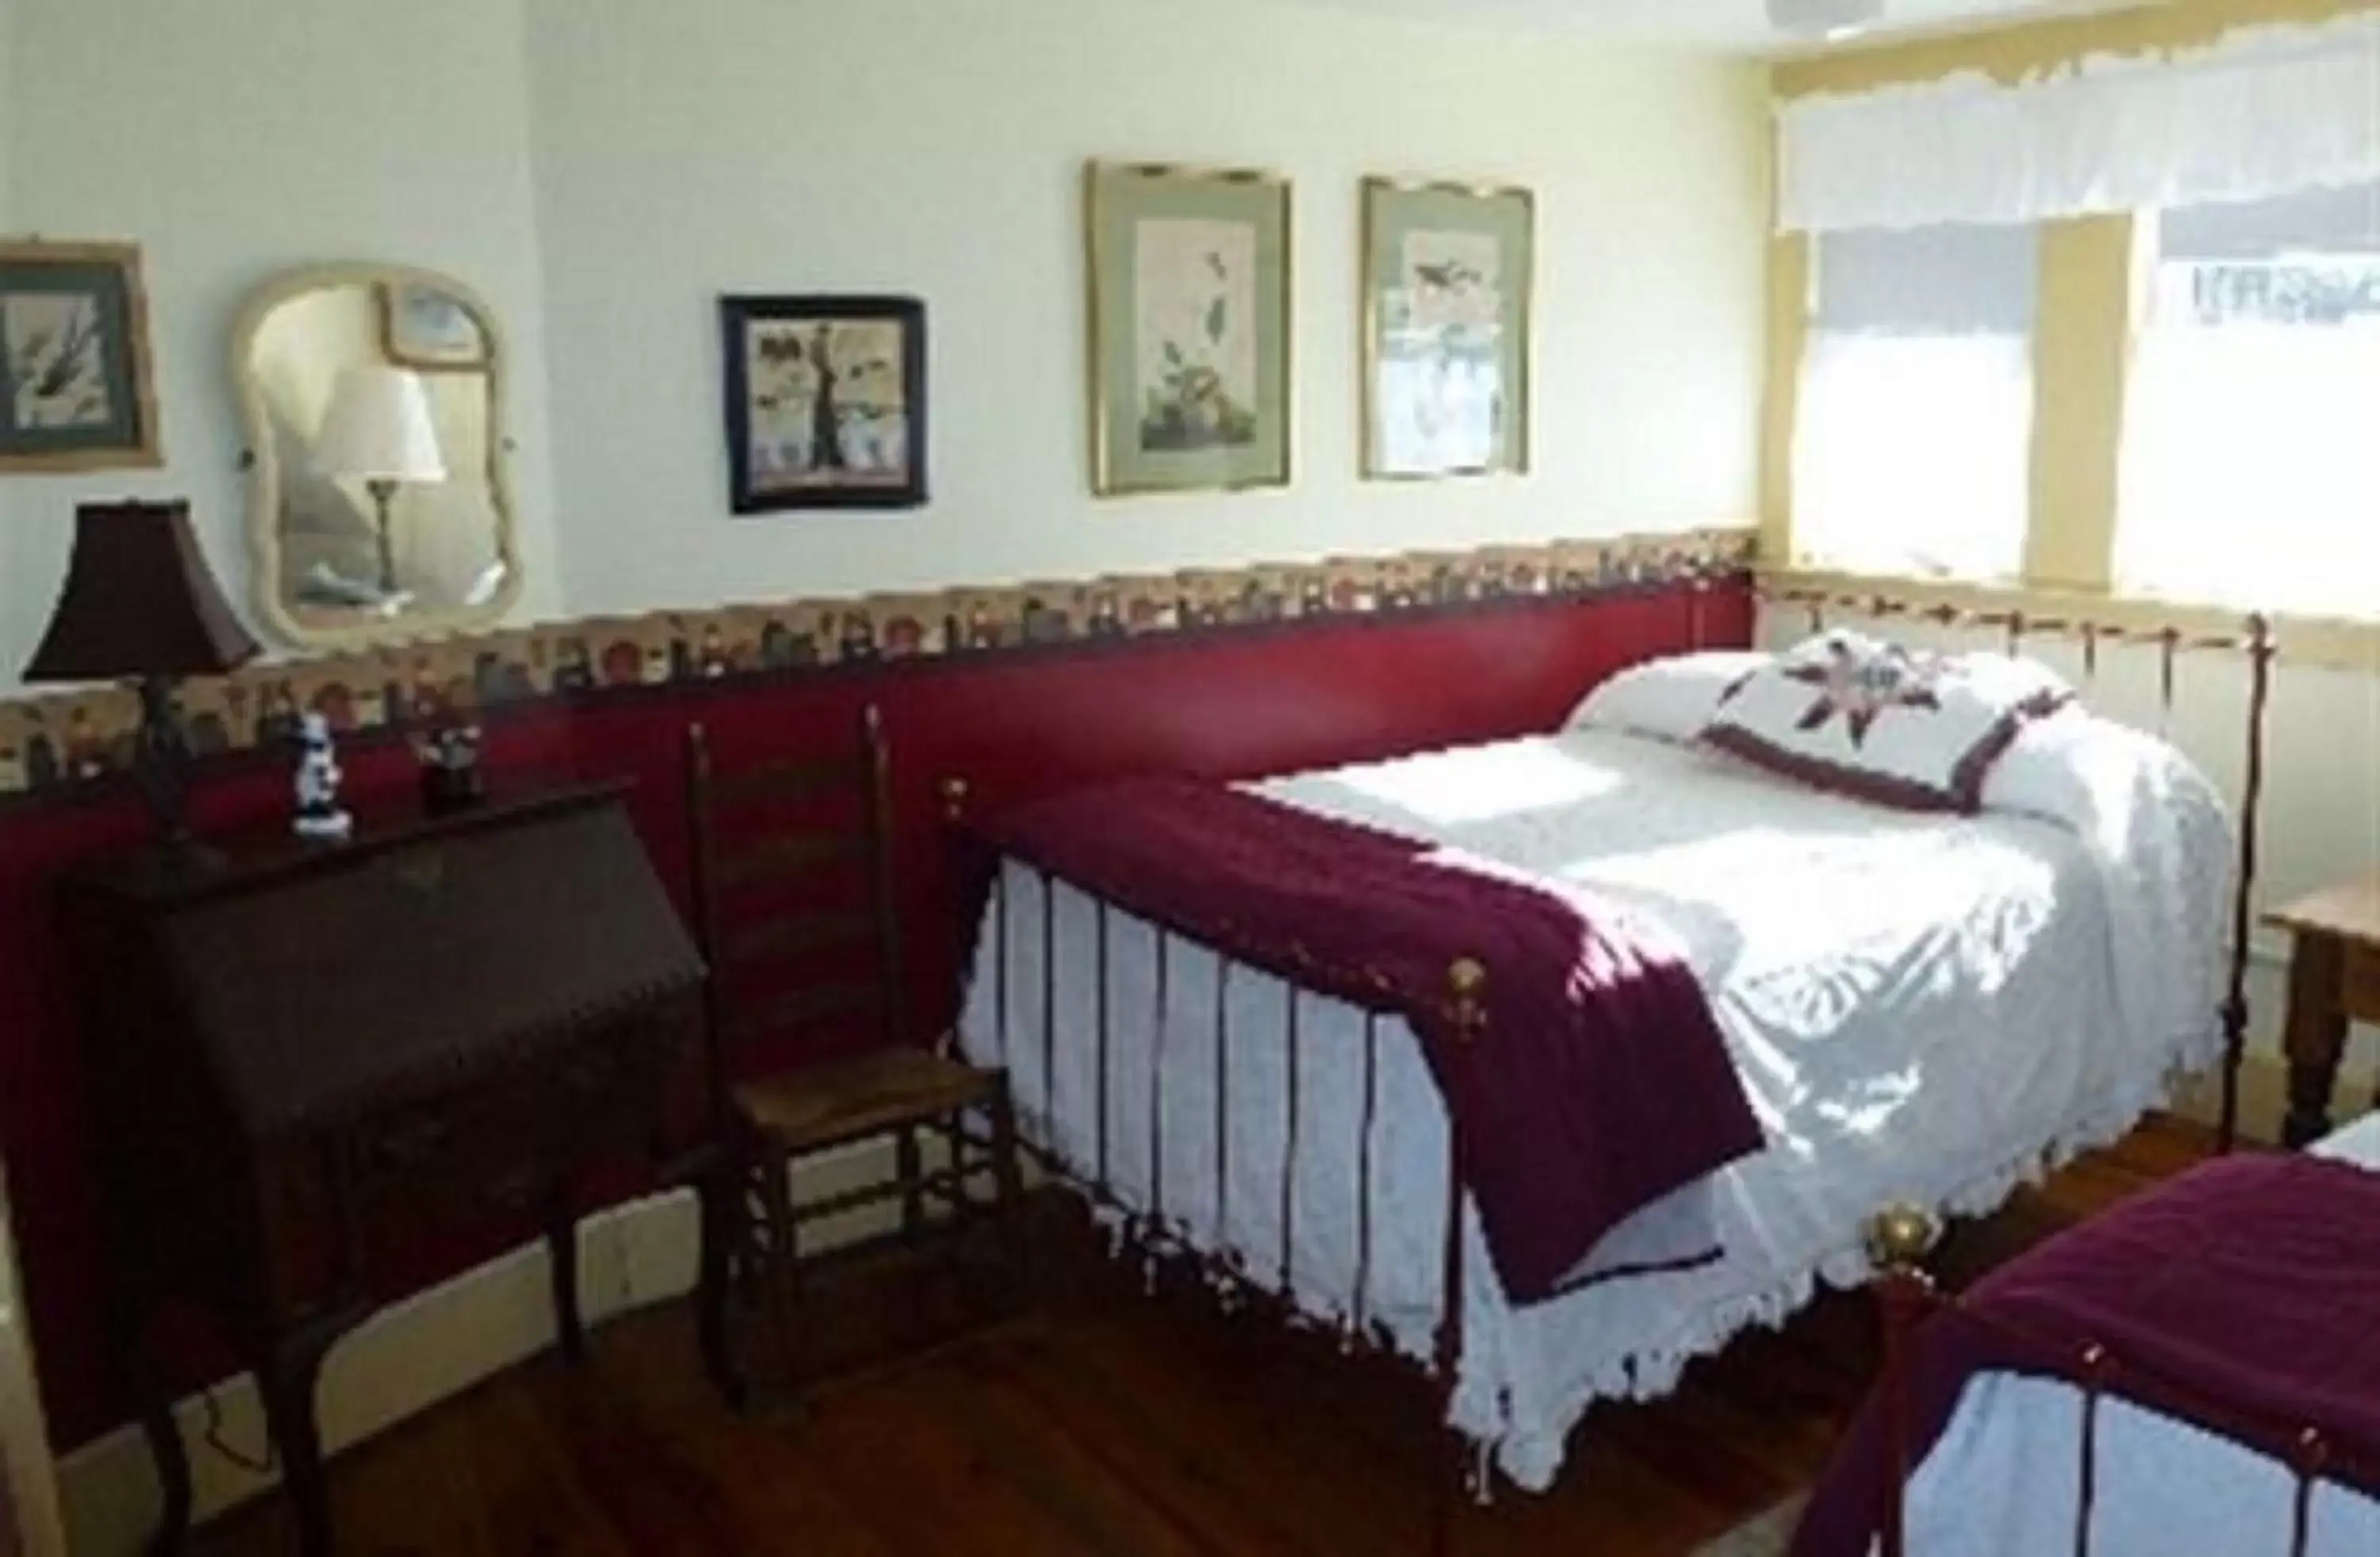 Bedroom in Spruce Moose Lodge